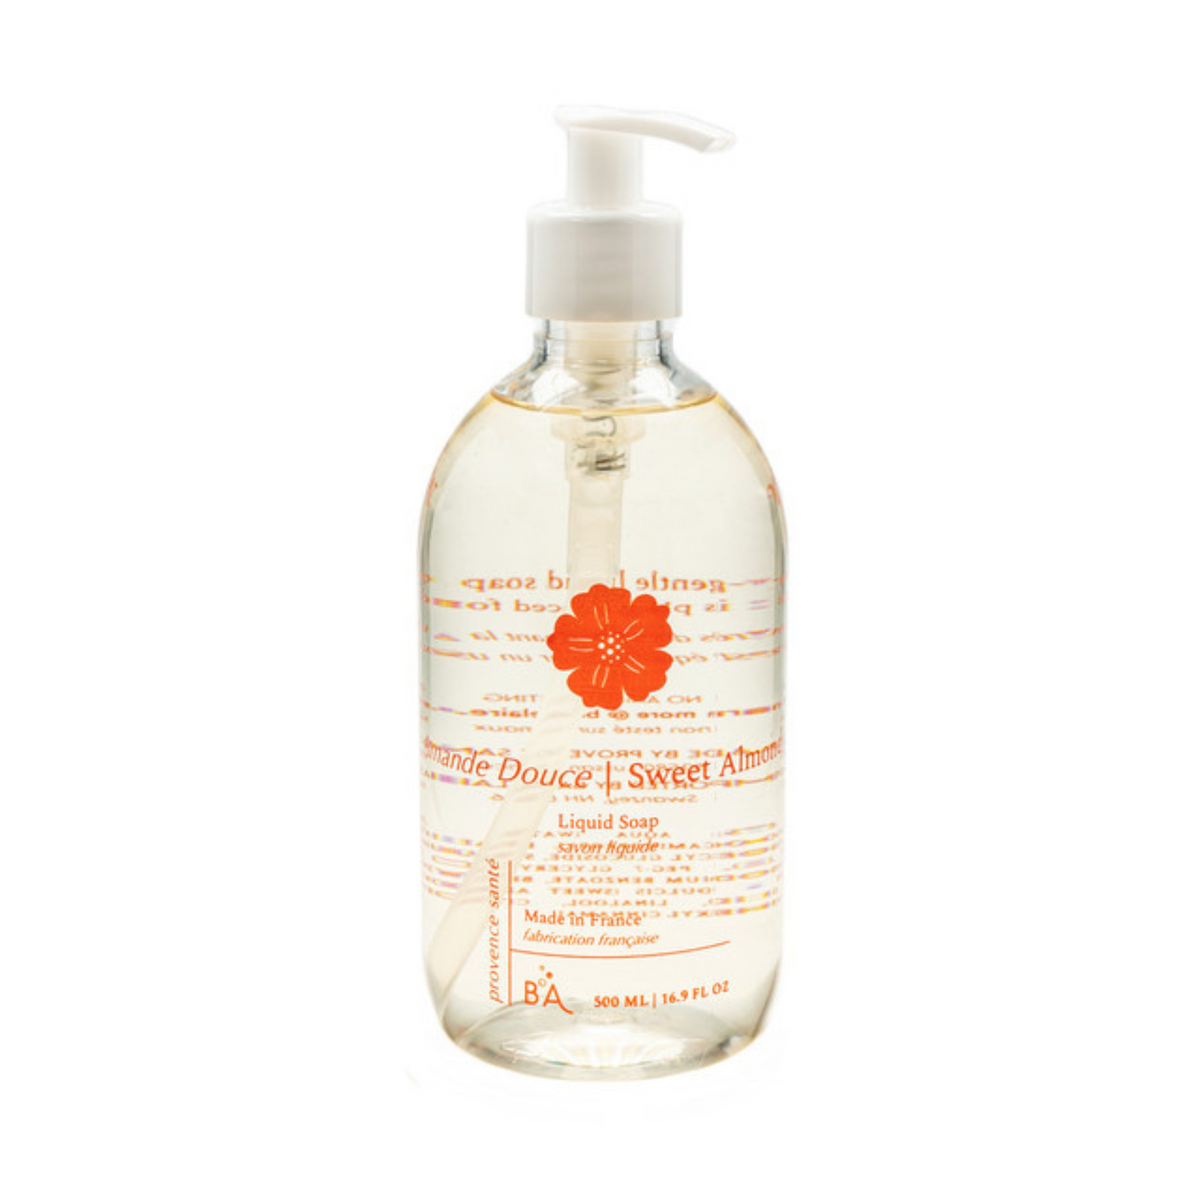 Primary image of Sweet Almond Liquid Soap